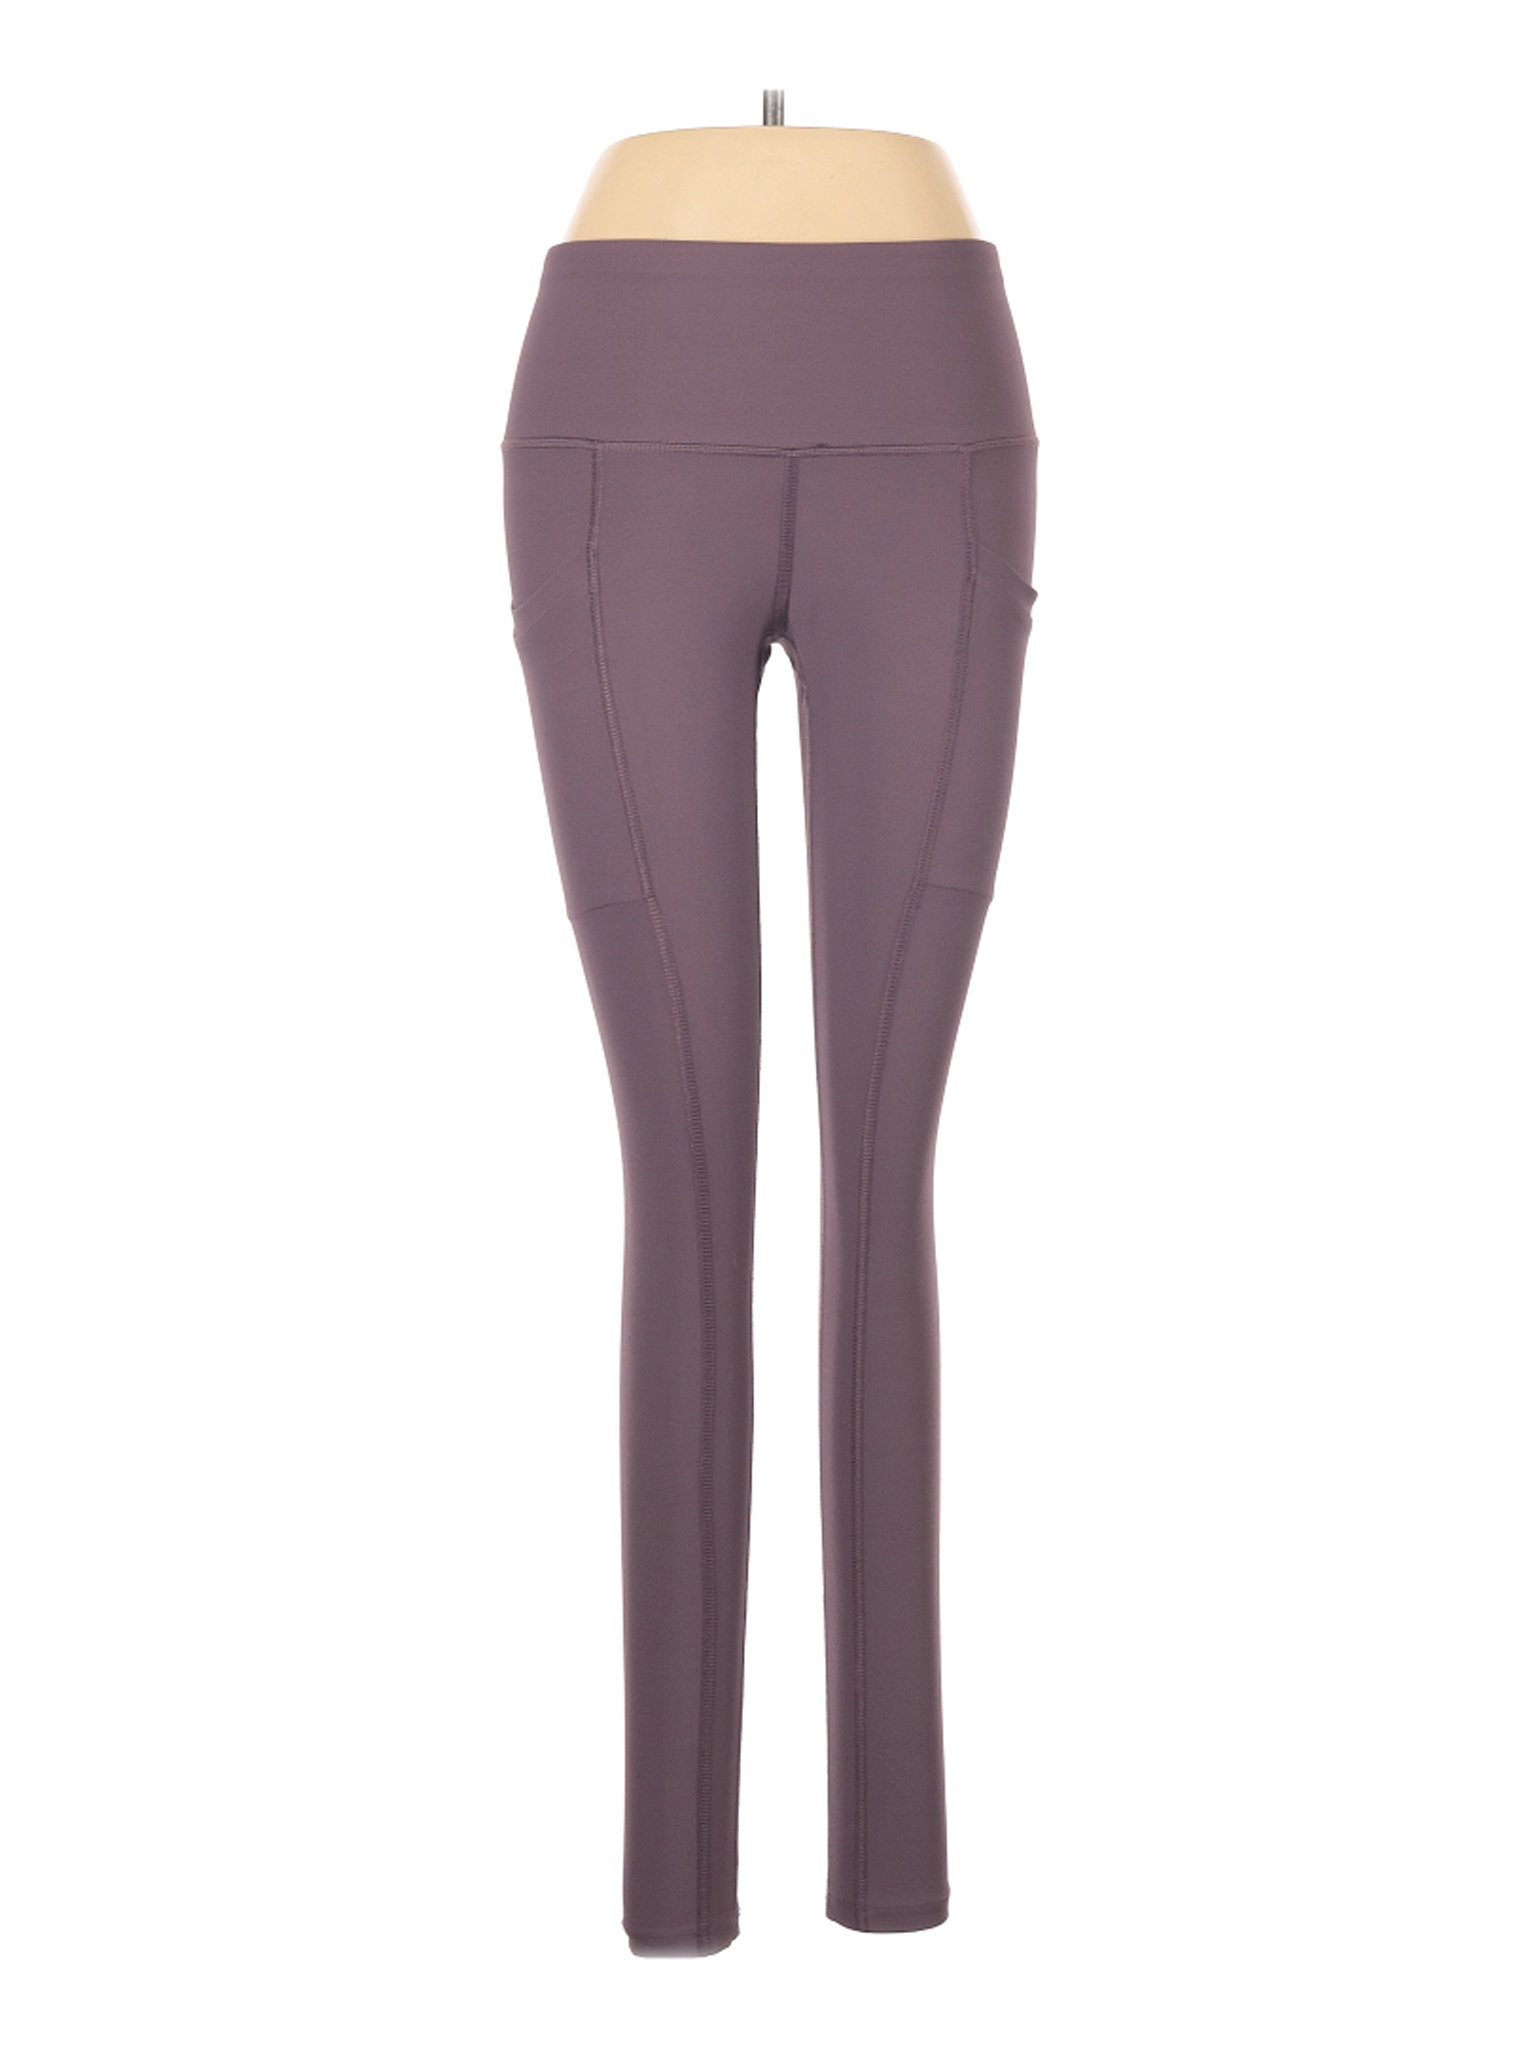 Apana Women Purple Active Pants XS | eBay